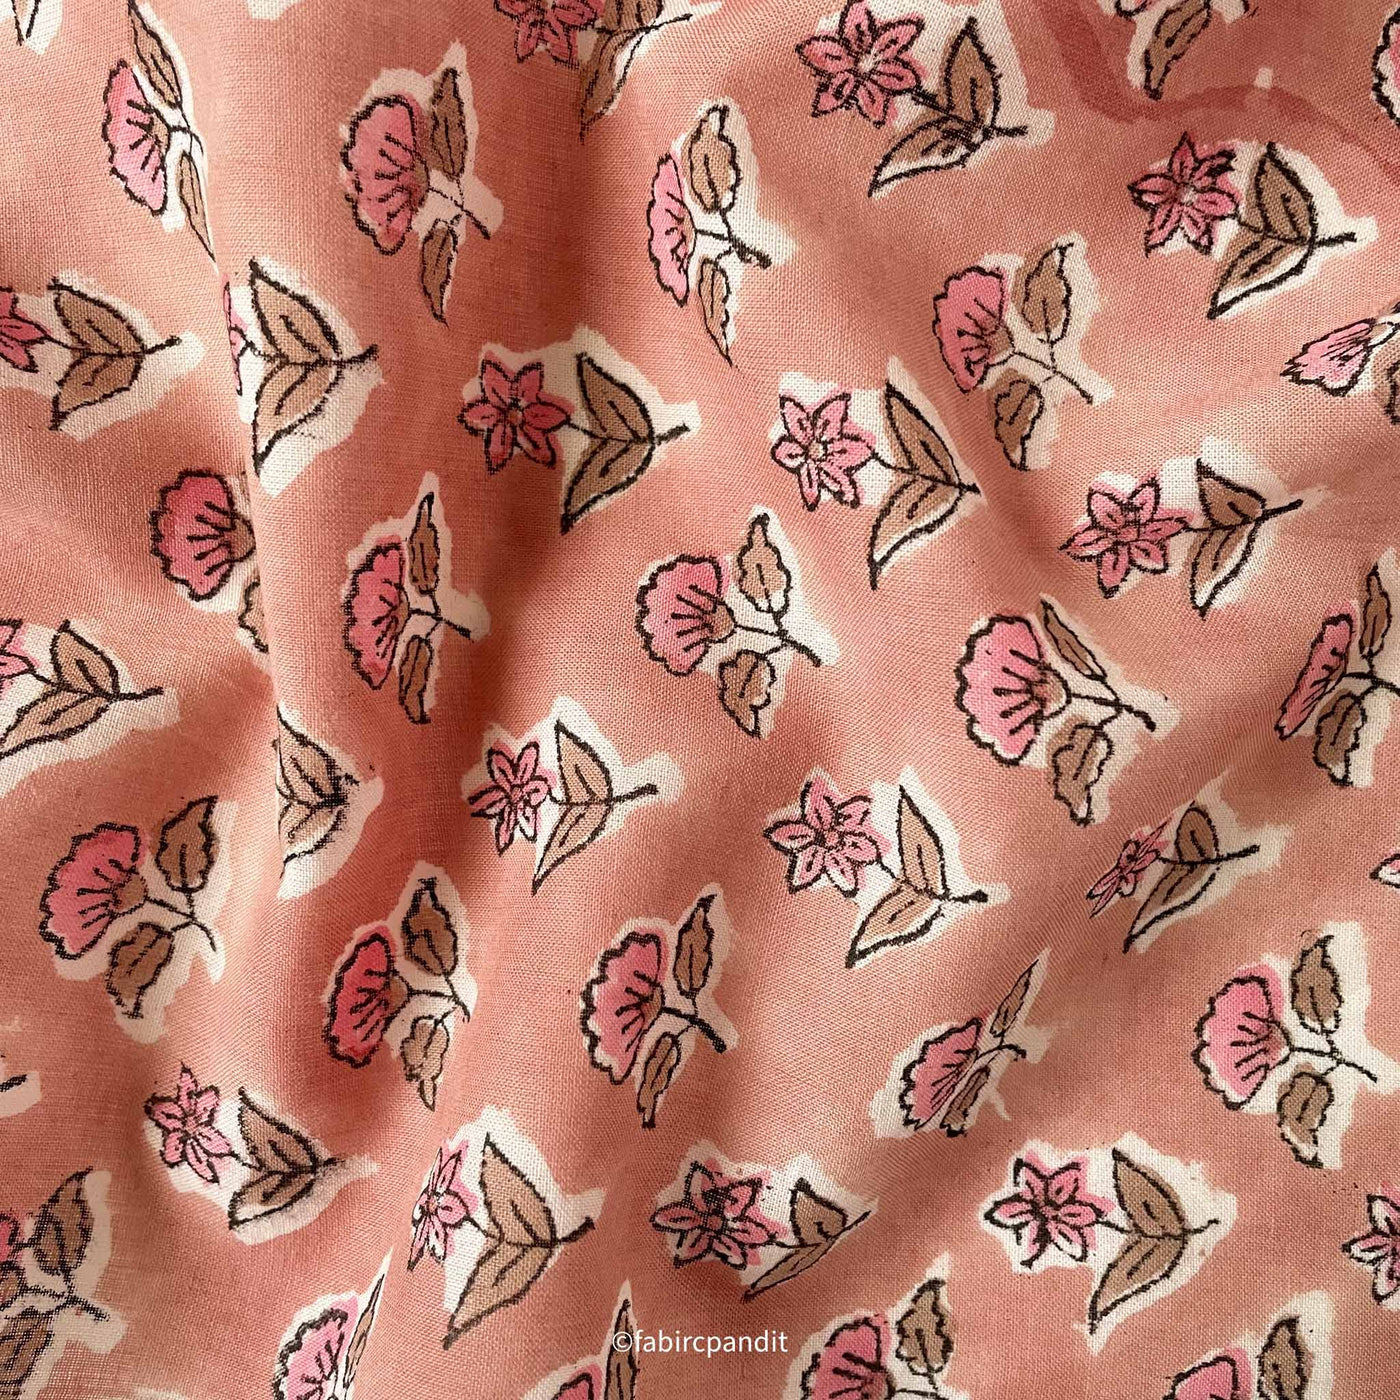 Fabric Pandit Cut Piece (CUT PIECE) Soft Peach Mughal Flower Pattern Hand Block Printed Pure Cotton Fabric (Width 43 inches)